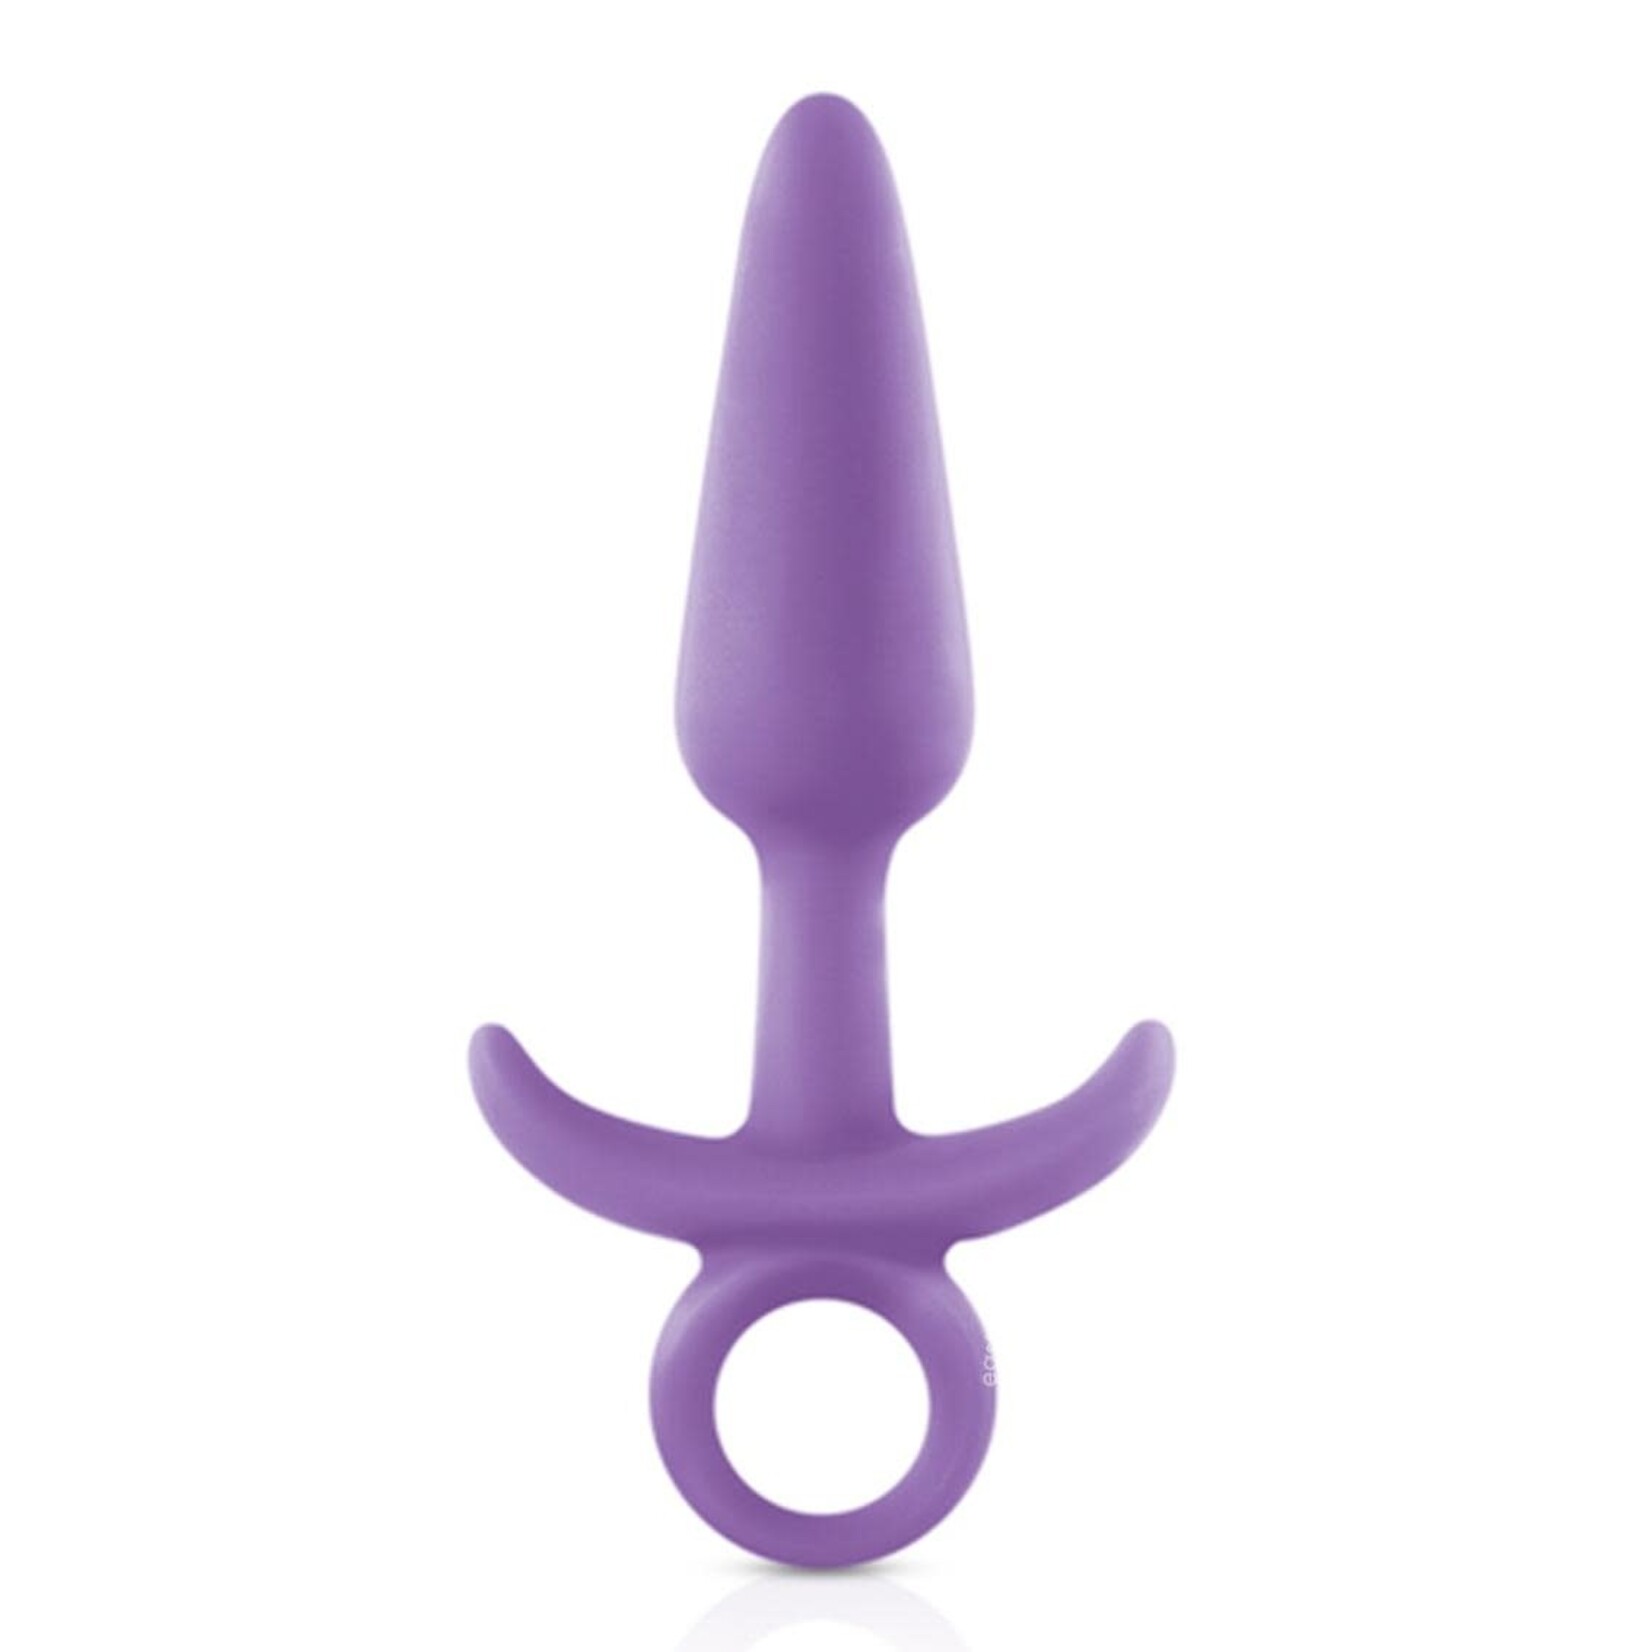 Firefly Prince Silicone Butt Plug Glow In The Dark - Purple